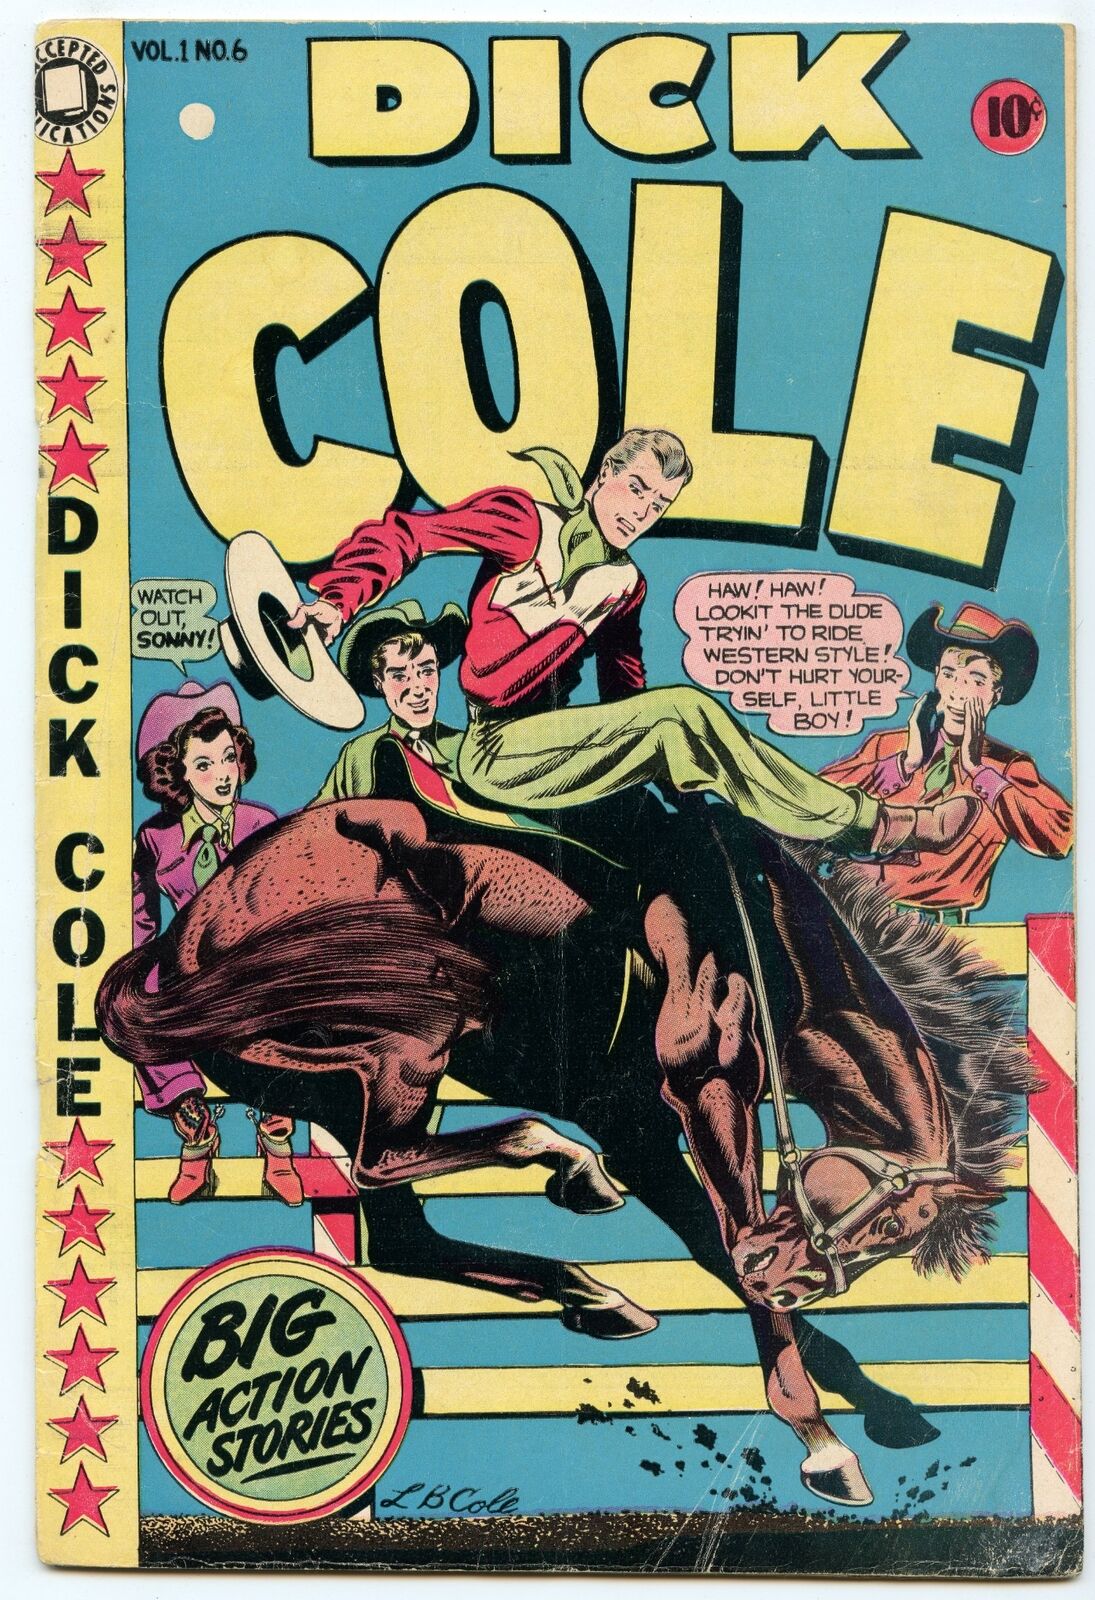 Dick Cole 6 (Nov 1949) VG (4.0)